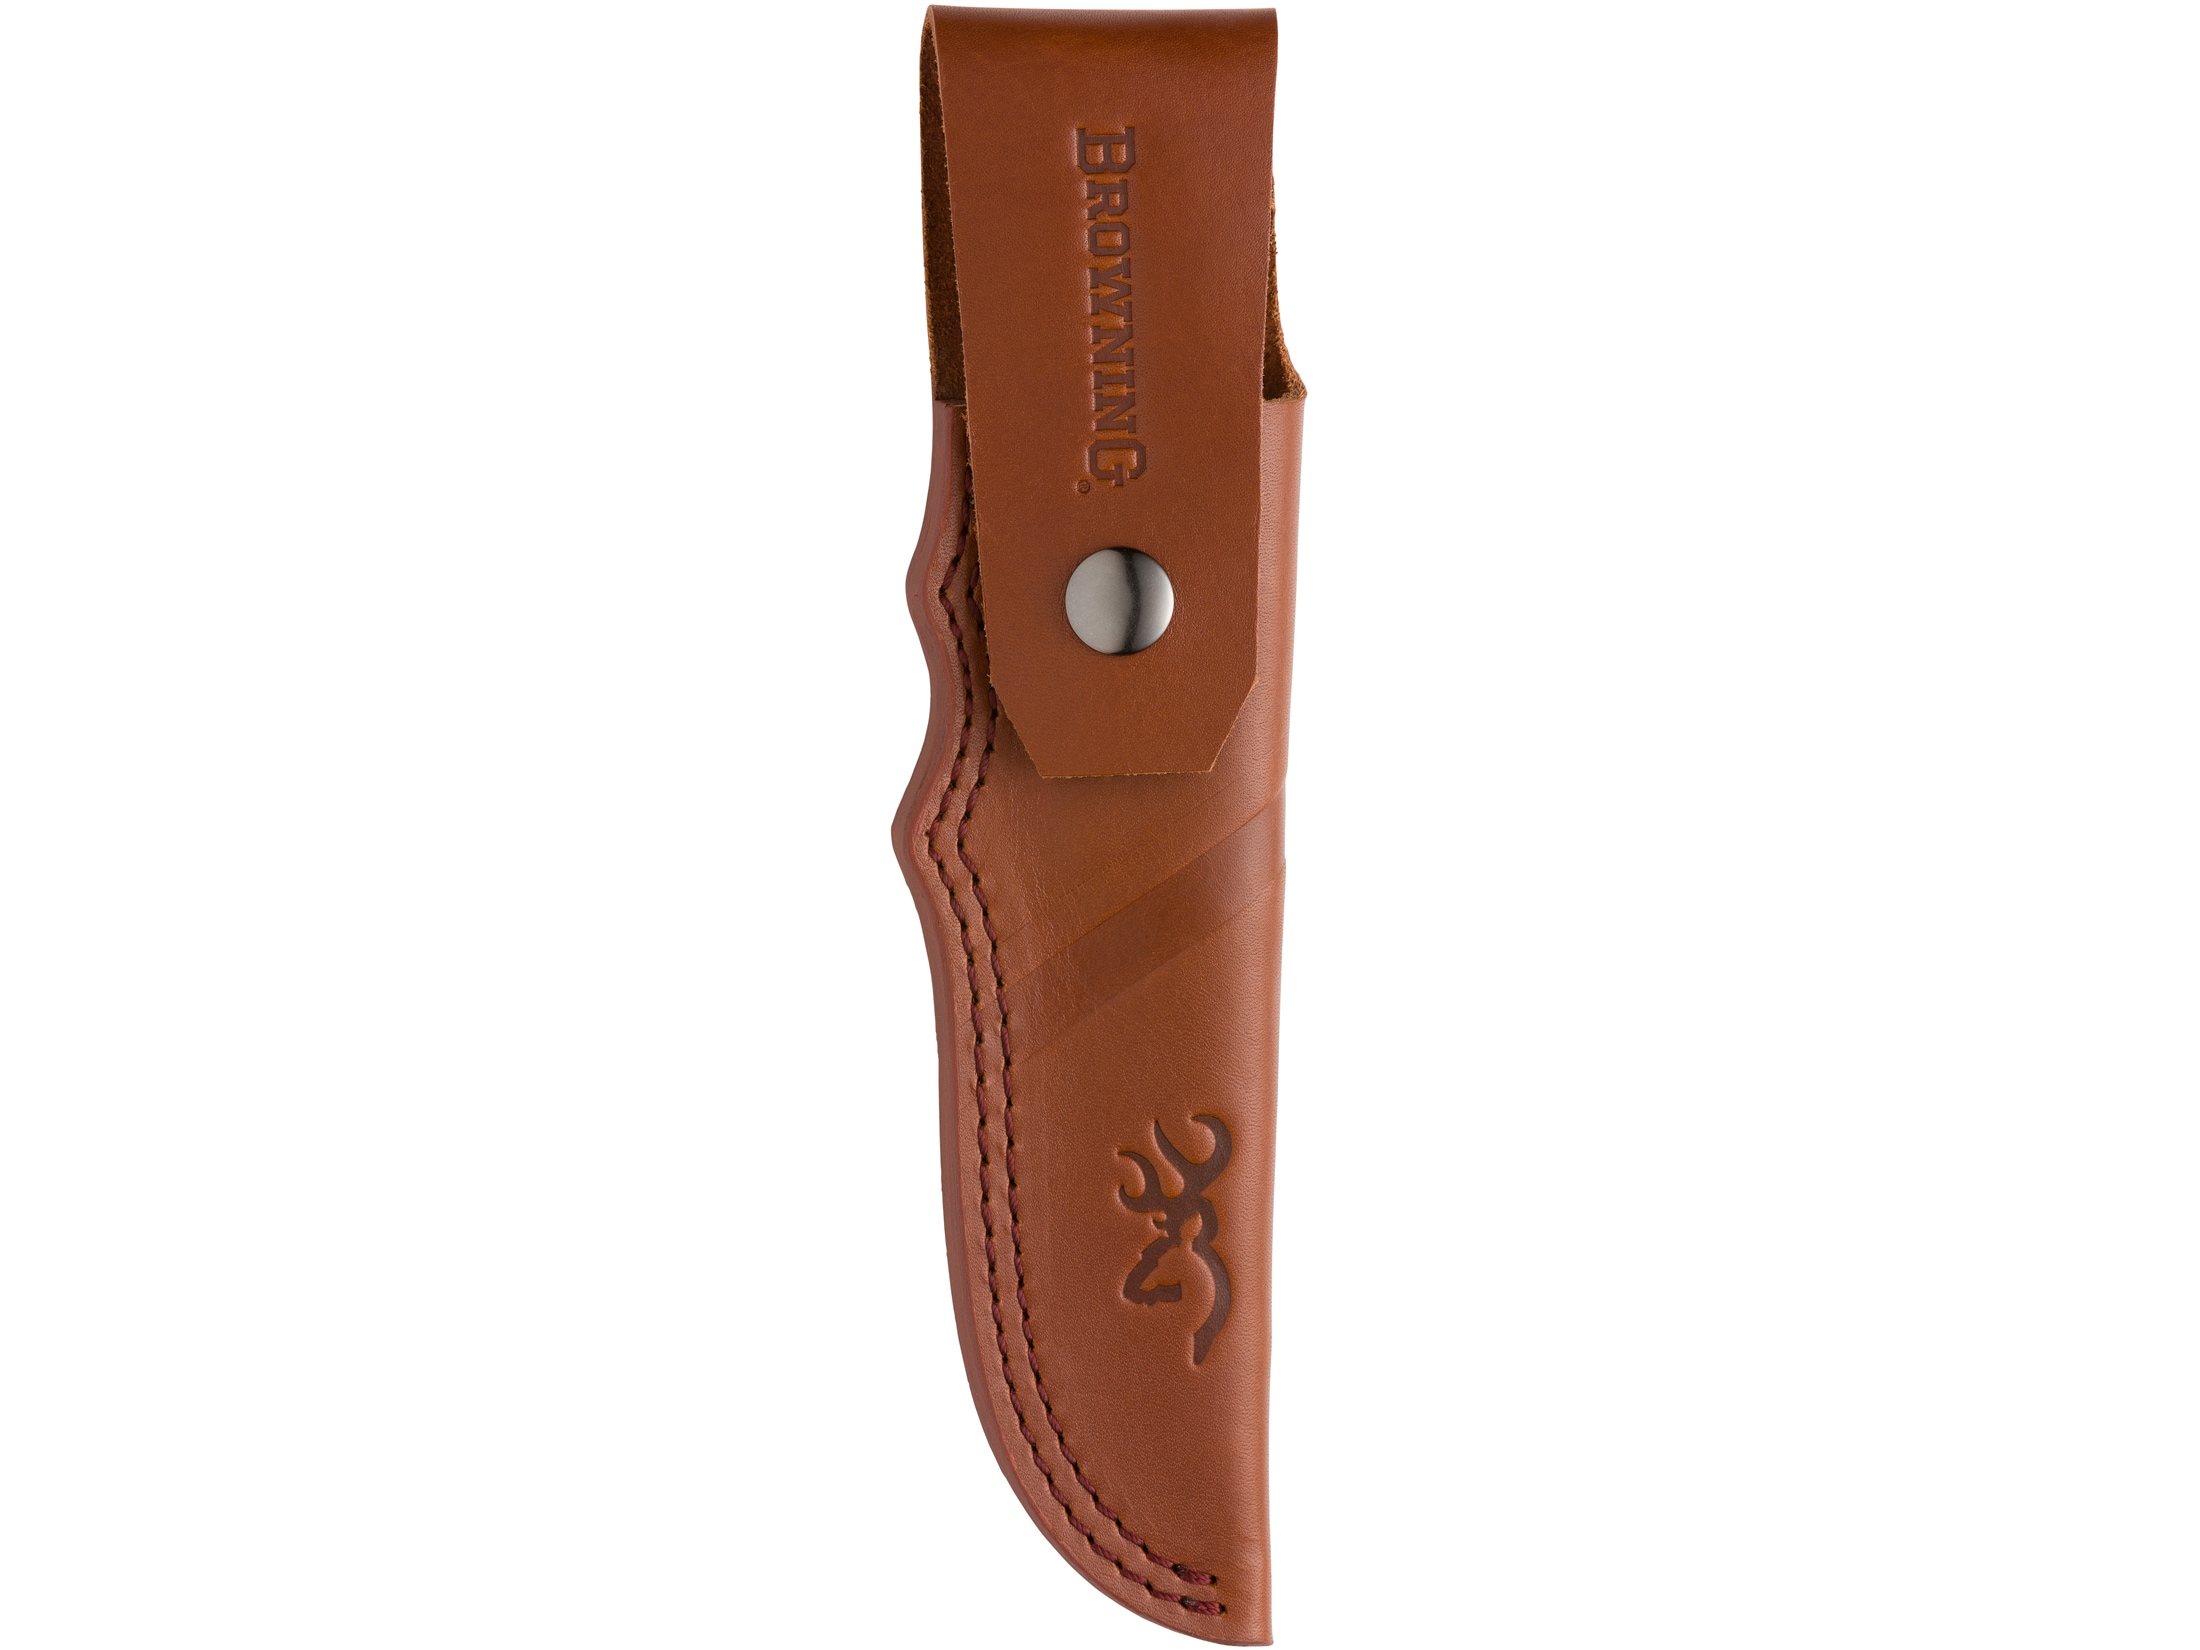 Browning Skinner/Gut hook Hunter Fixed Blade Knife 3.5″ Skinner with Gut Hook 440C Stainless Stonewashed Black Oxide Blade Wood Handle For Sale